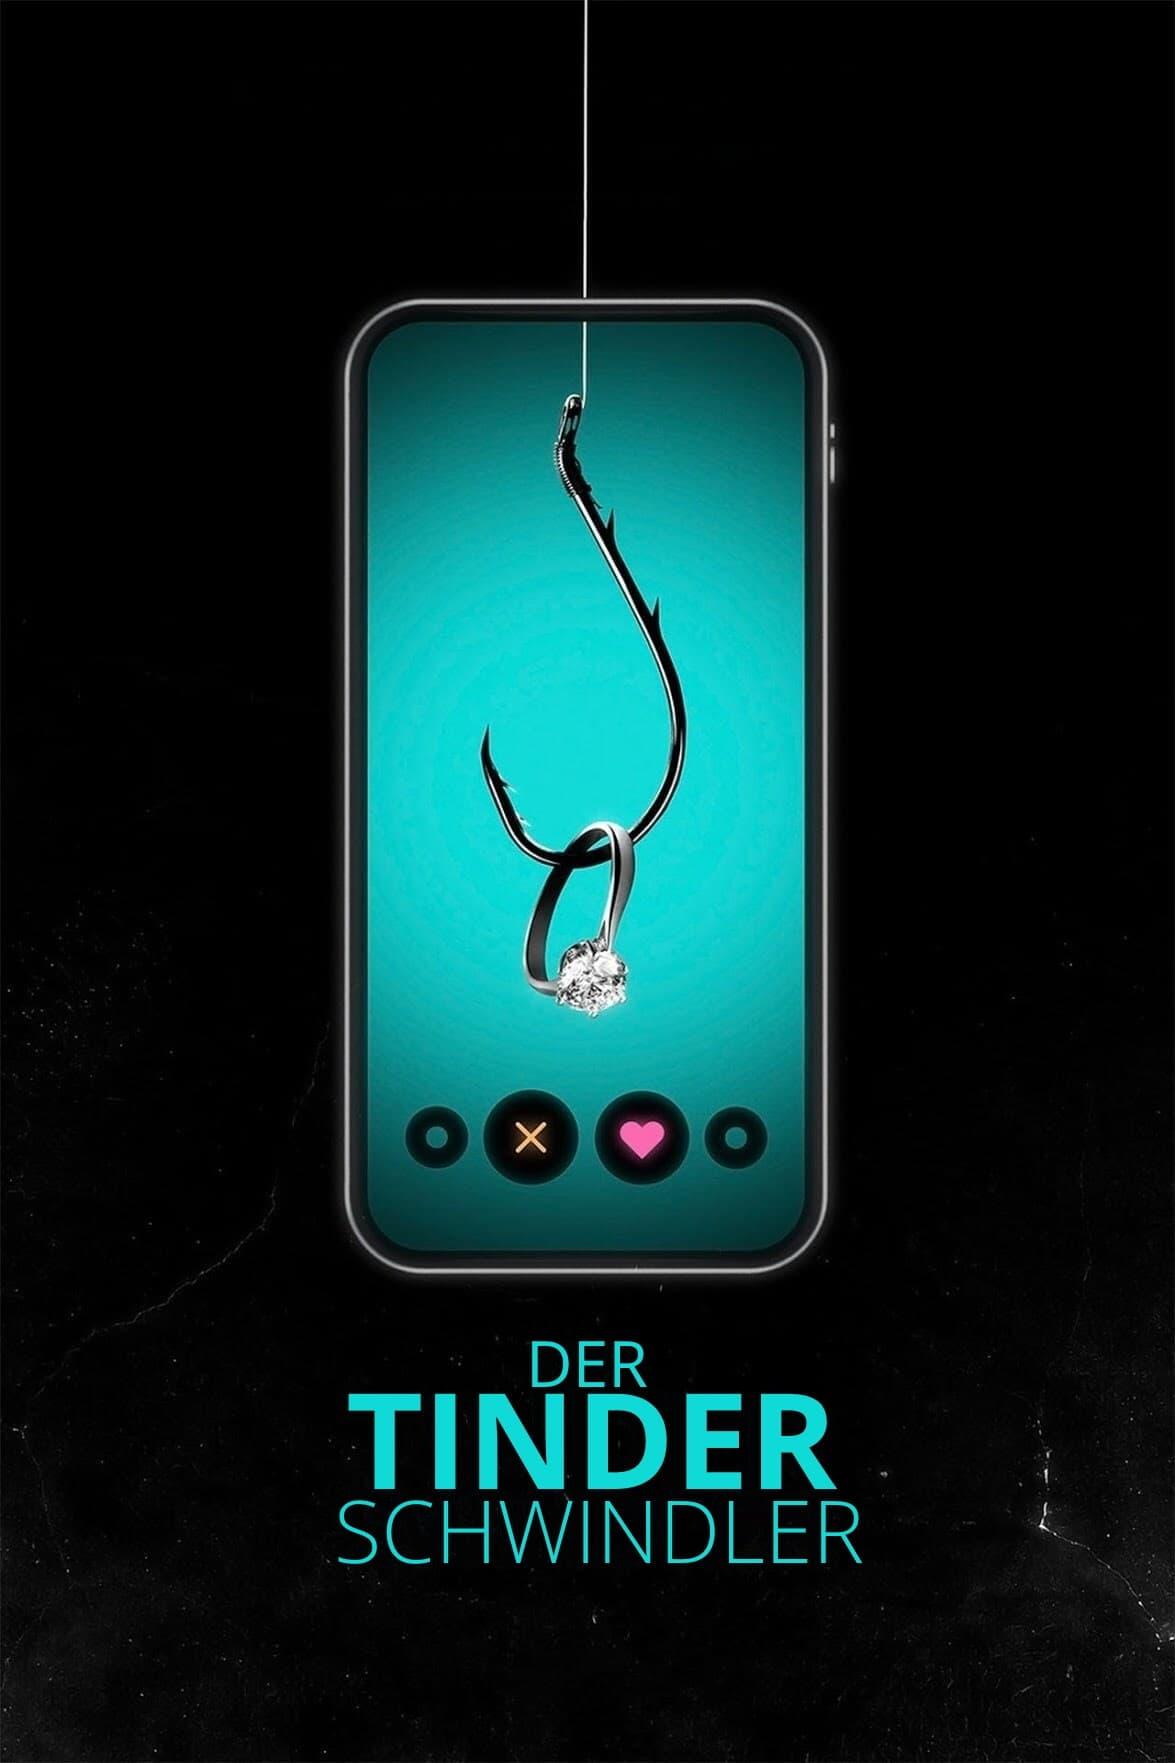 Der Tinder-Schwindler poster